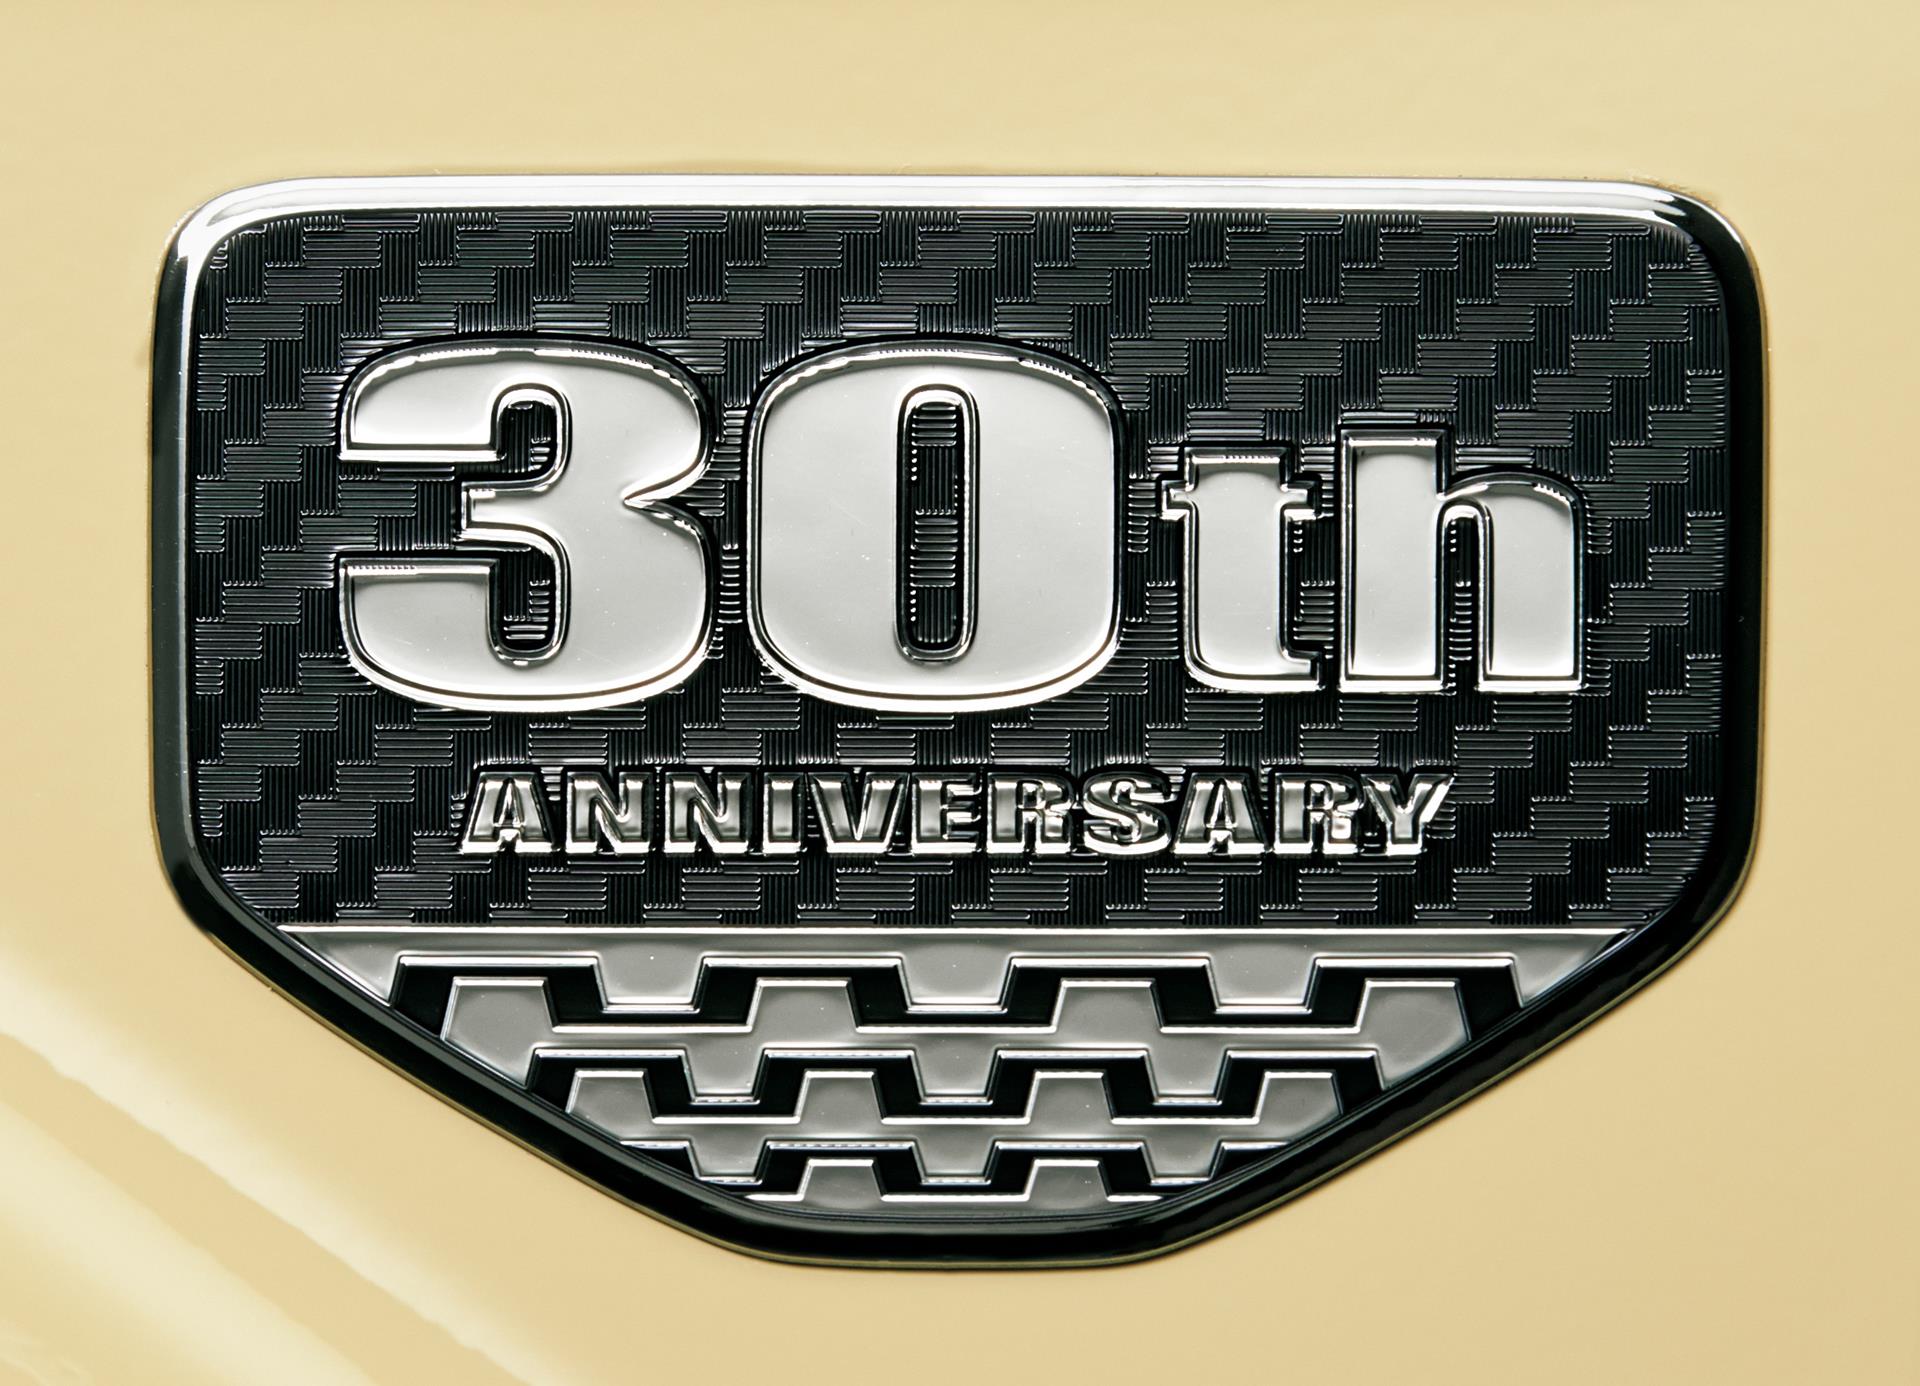 Land Cruiser 70 series 30th anniversary commemorative emblem